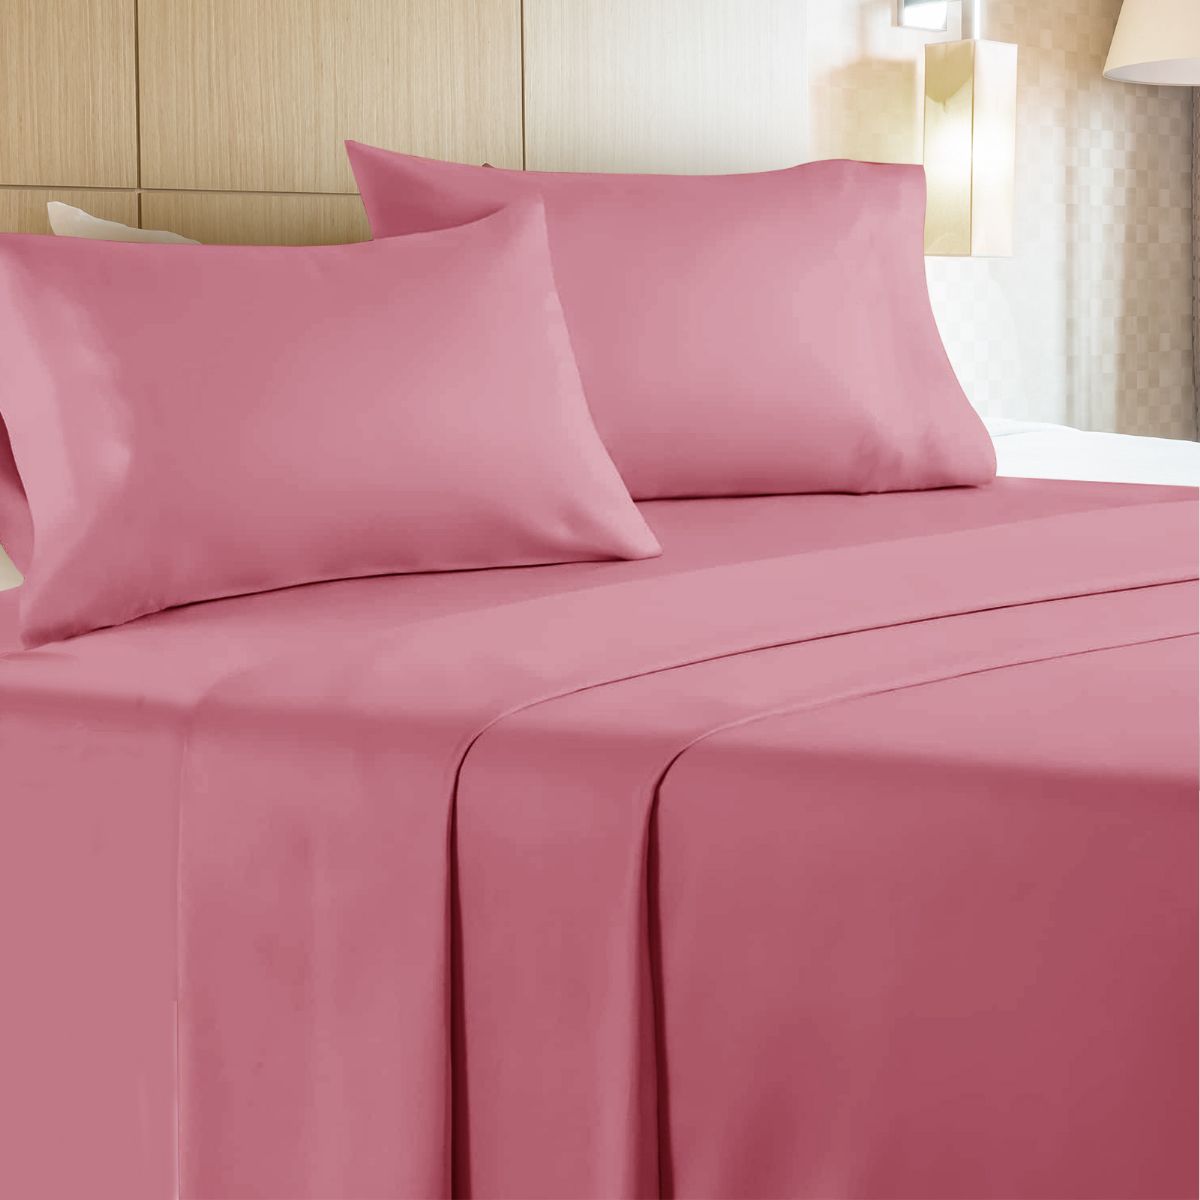 6 Wholesale 4 Piece Microfiber Bed Sheet Set Queen Size In Maroon